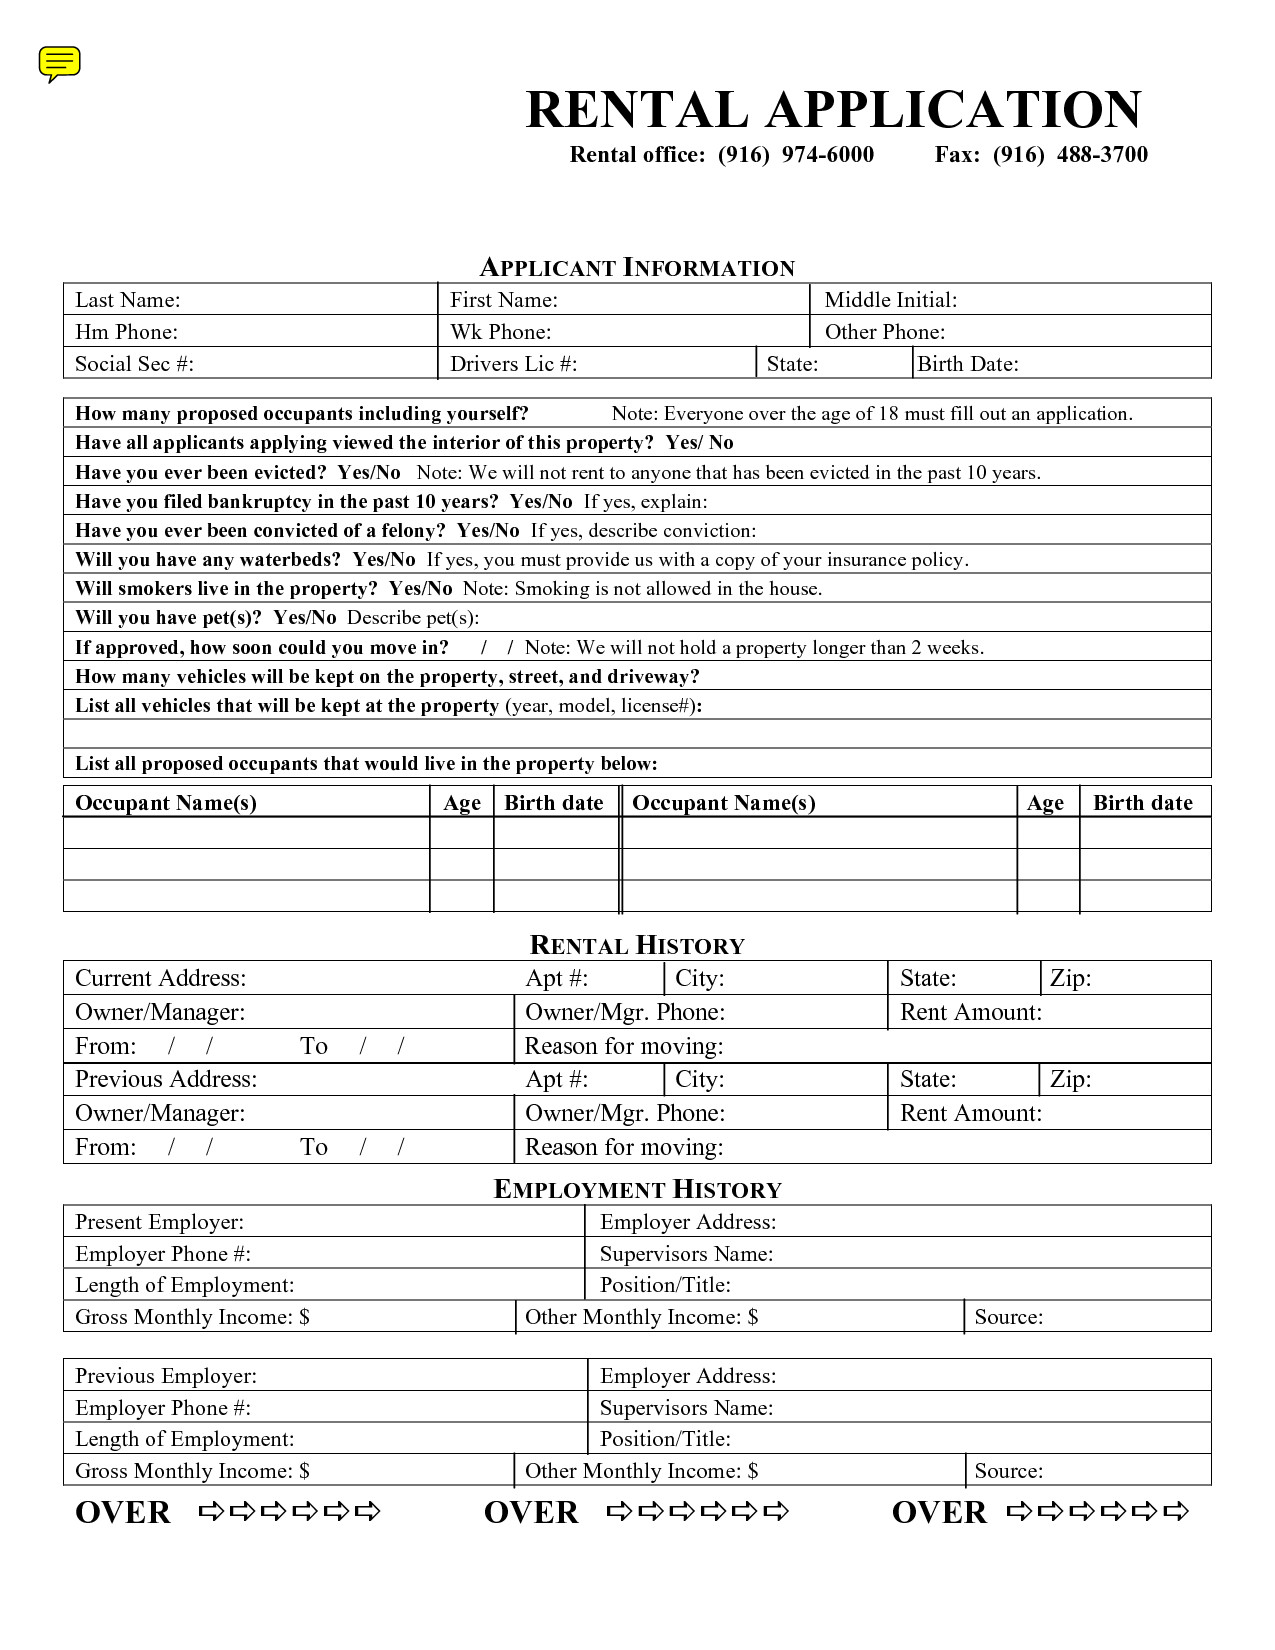 Free Rental Application Form by Mary jMenintigar house